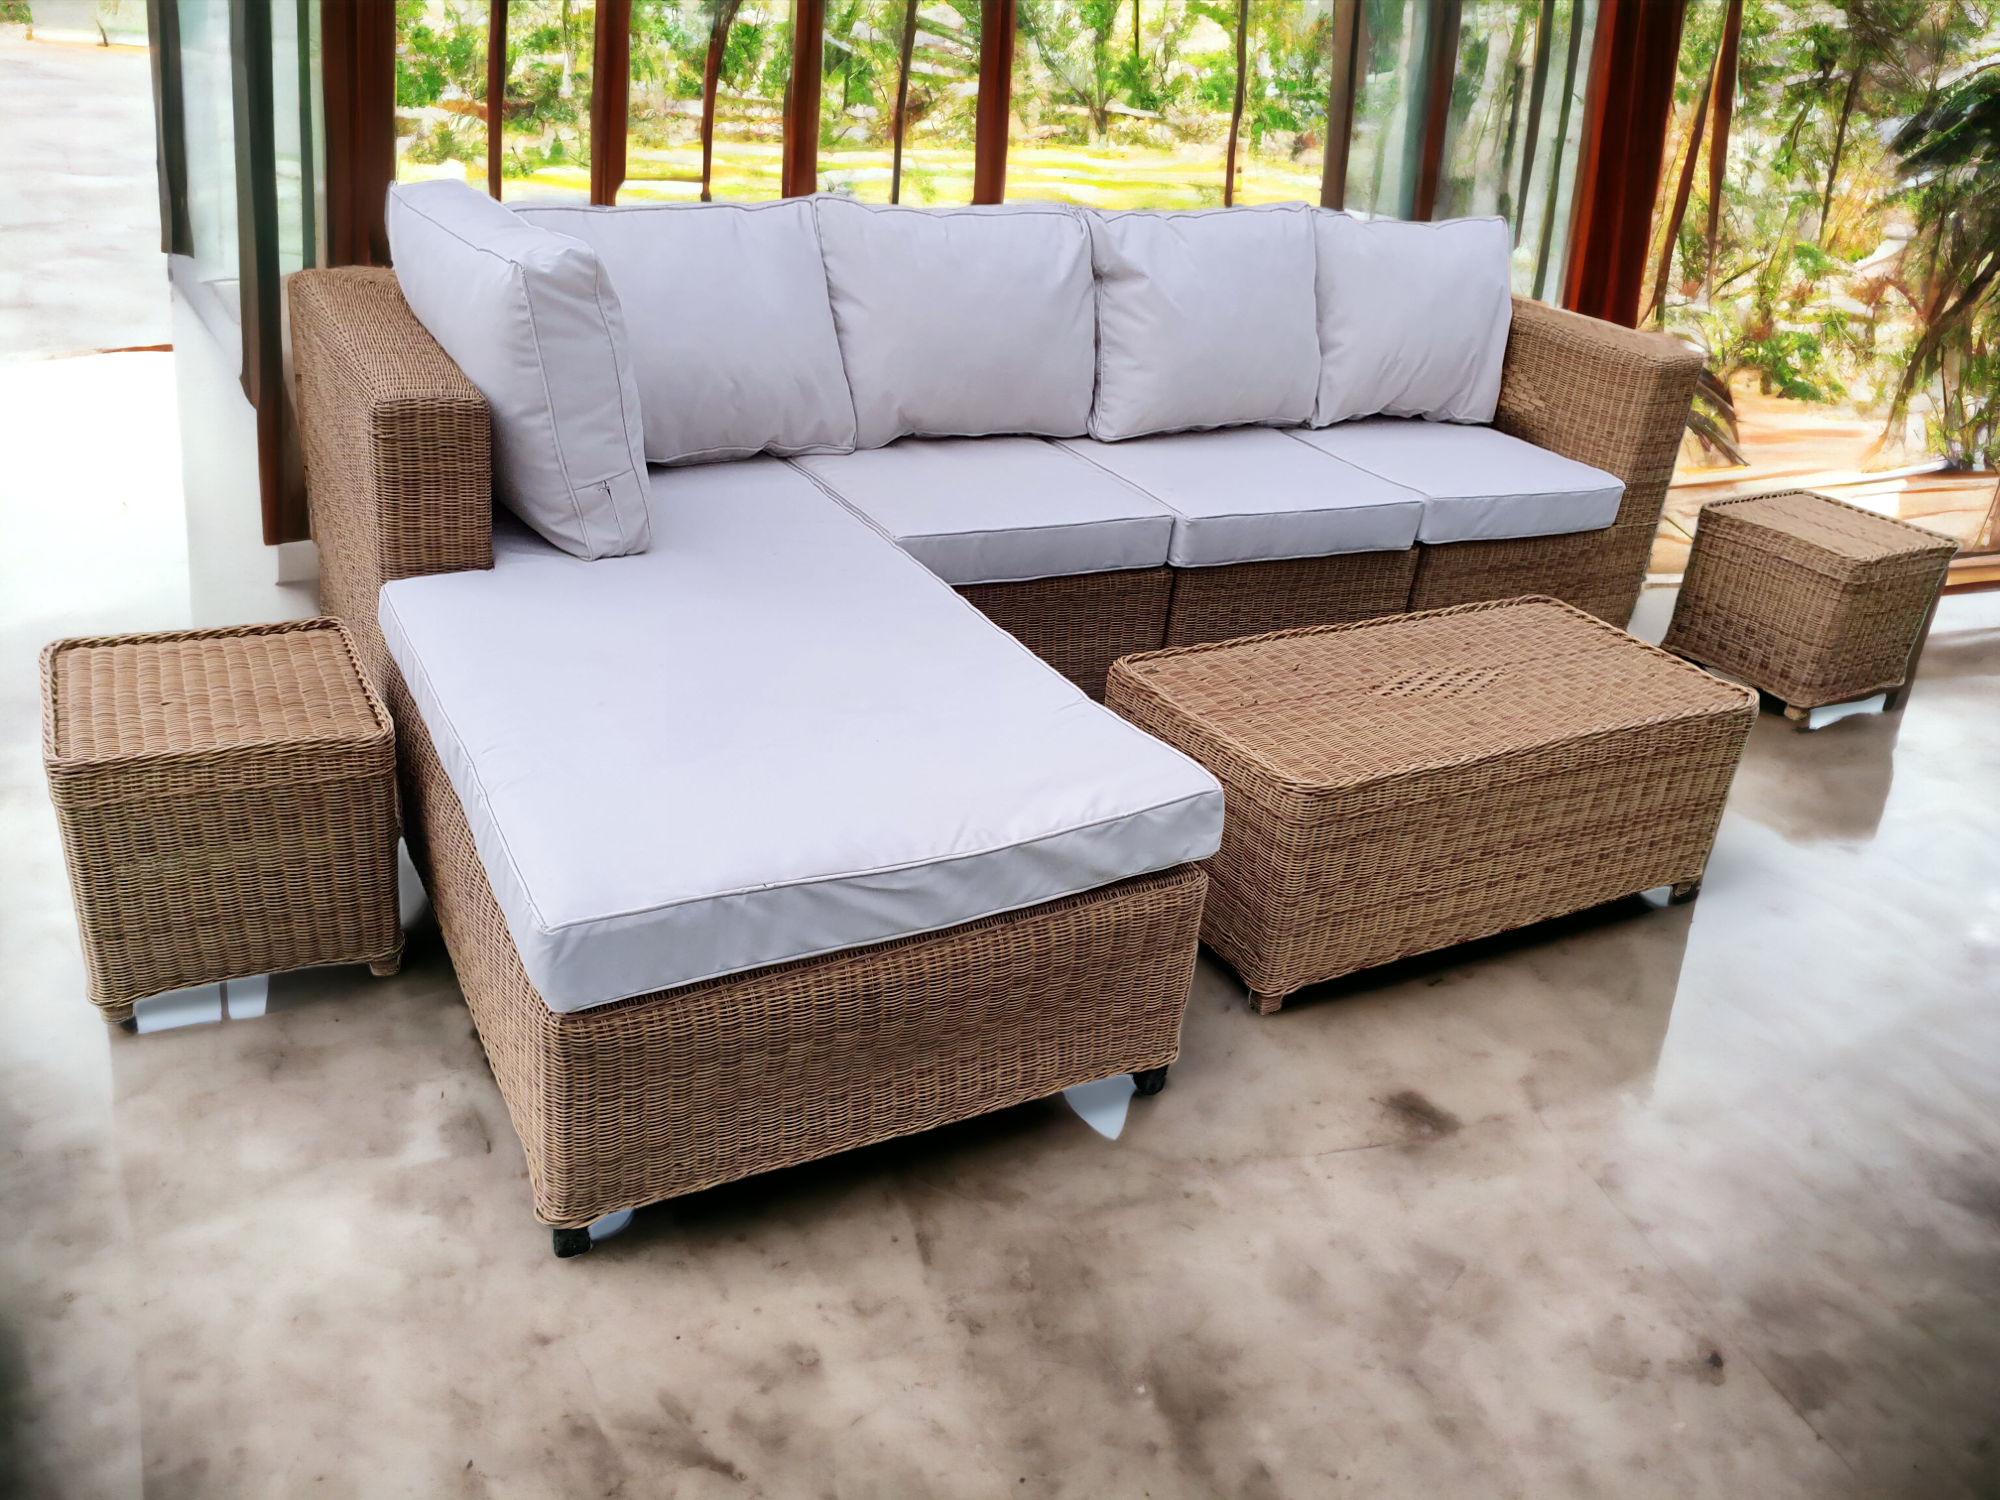 Outdoor Furniture L-Shaped Modular 6-Seater set Flat-top design